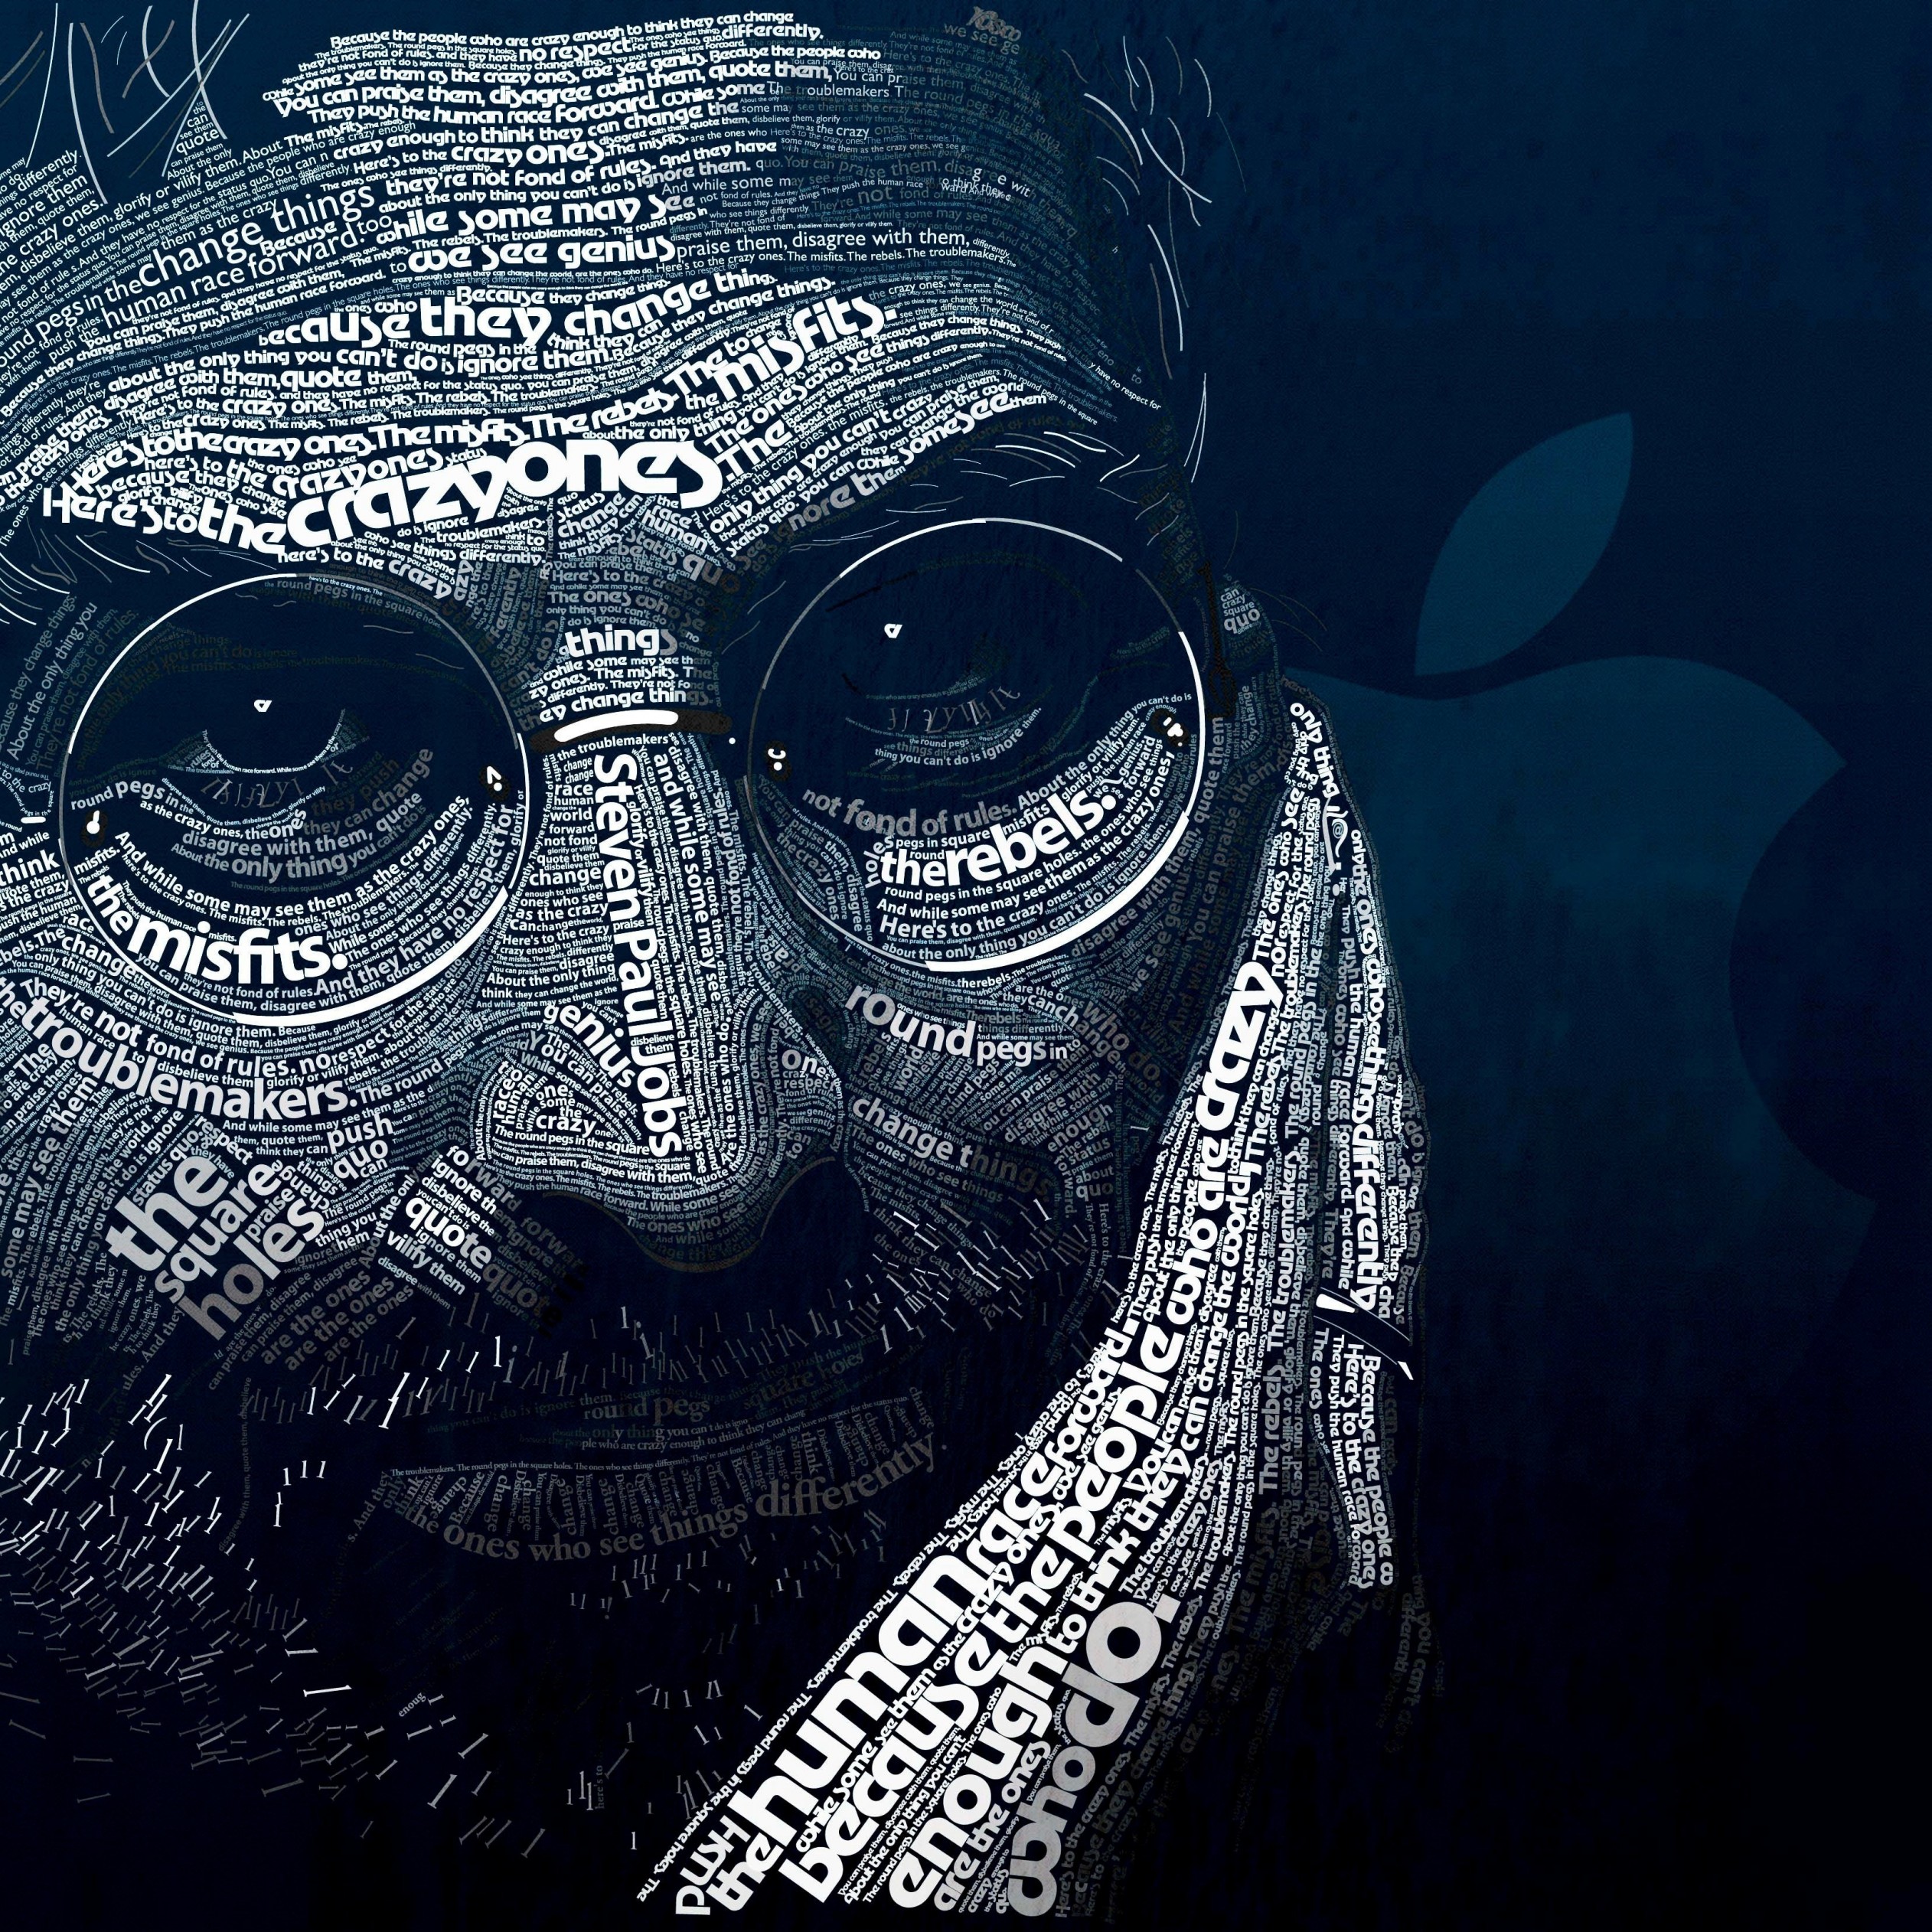 Steve Jobs Typographic Portrait Wallpaper for Apple iPad 4